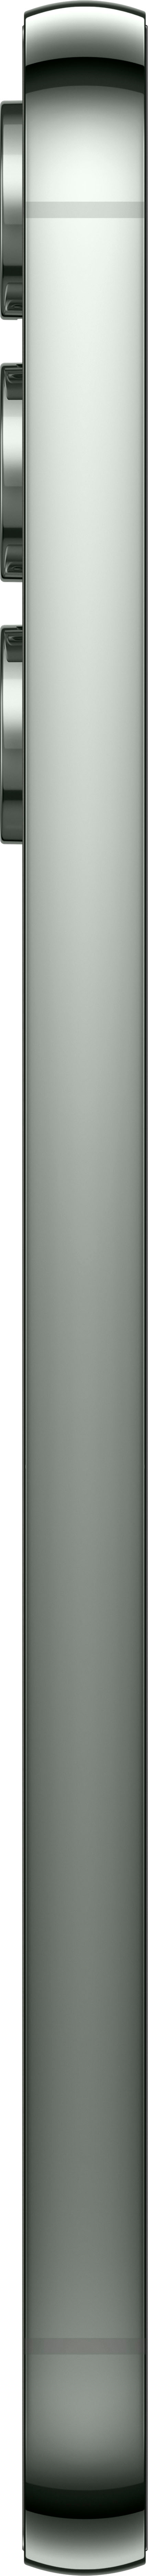 Samsung Galaxy S23 Ultra 256GB Lavender (Verizon) SM-S918ULIAVZW - Best Buy